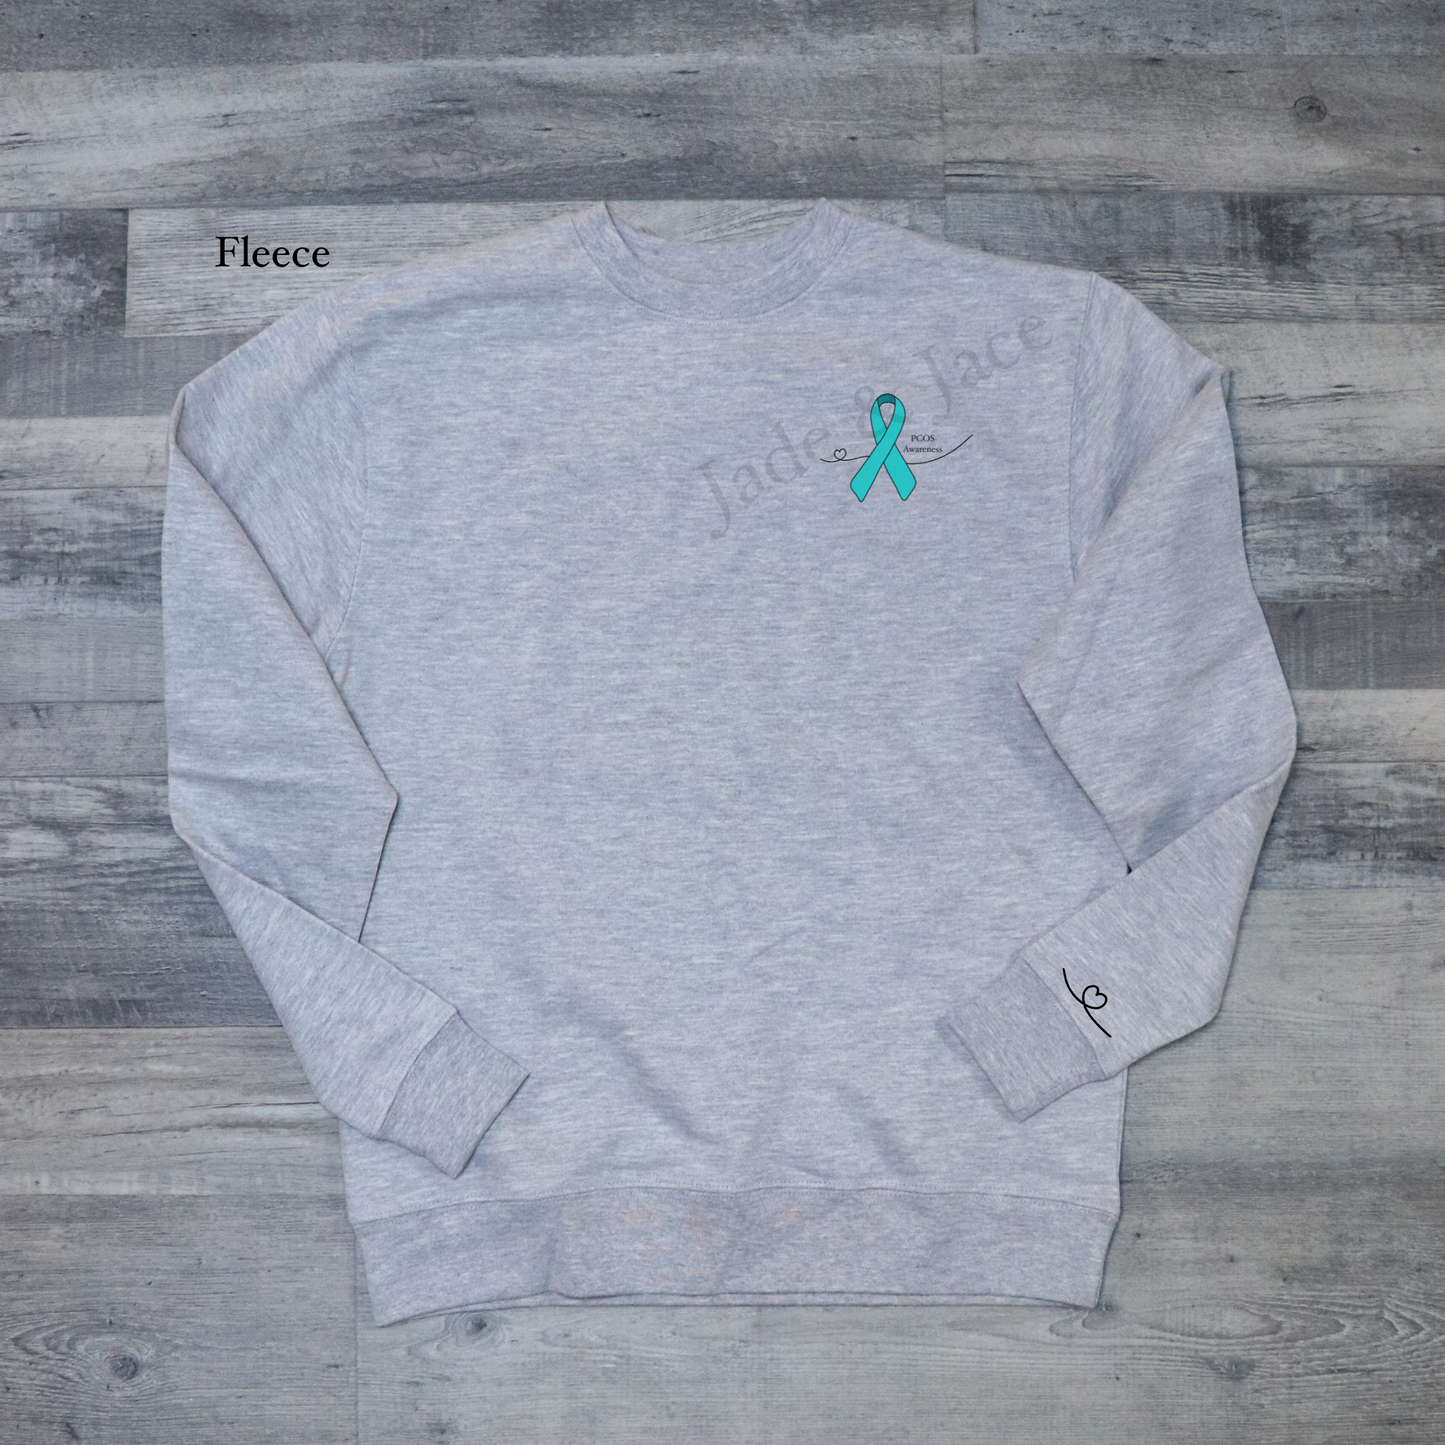 PCOS Awareness Crewneck Sweatshirt